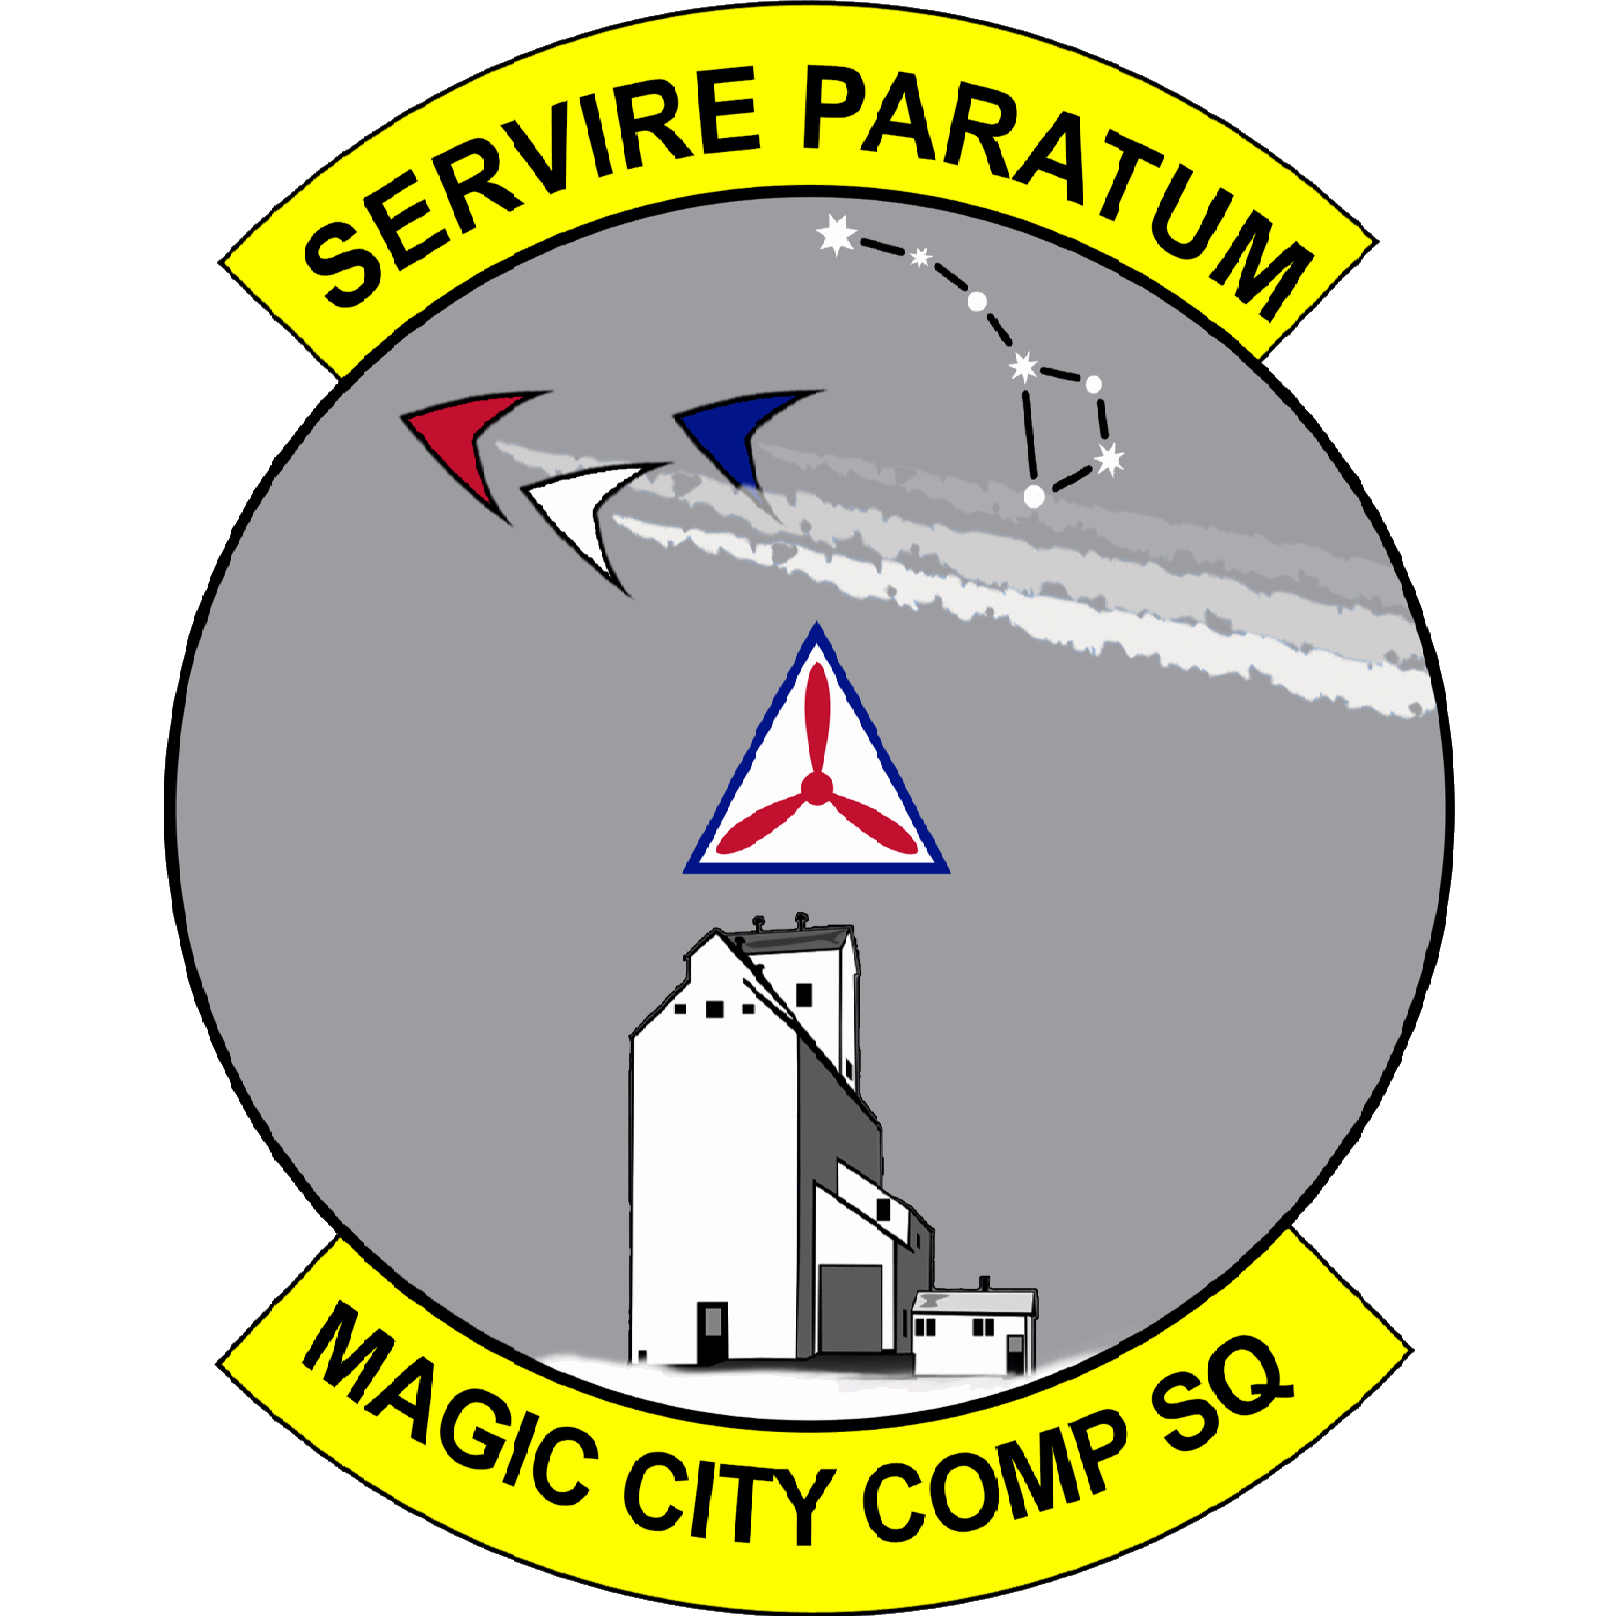 Magic City Composite Squadron